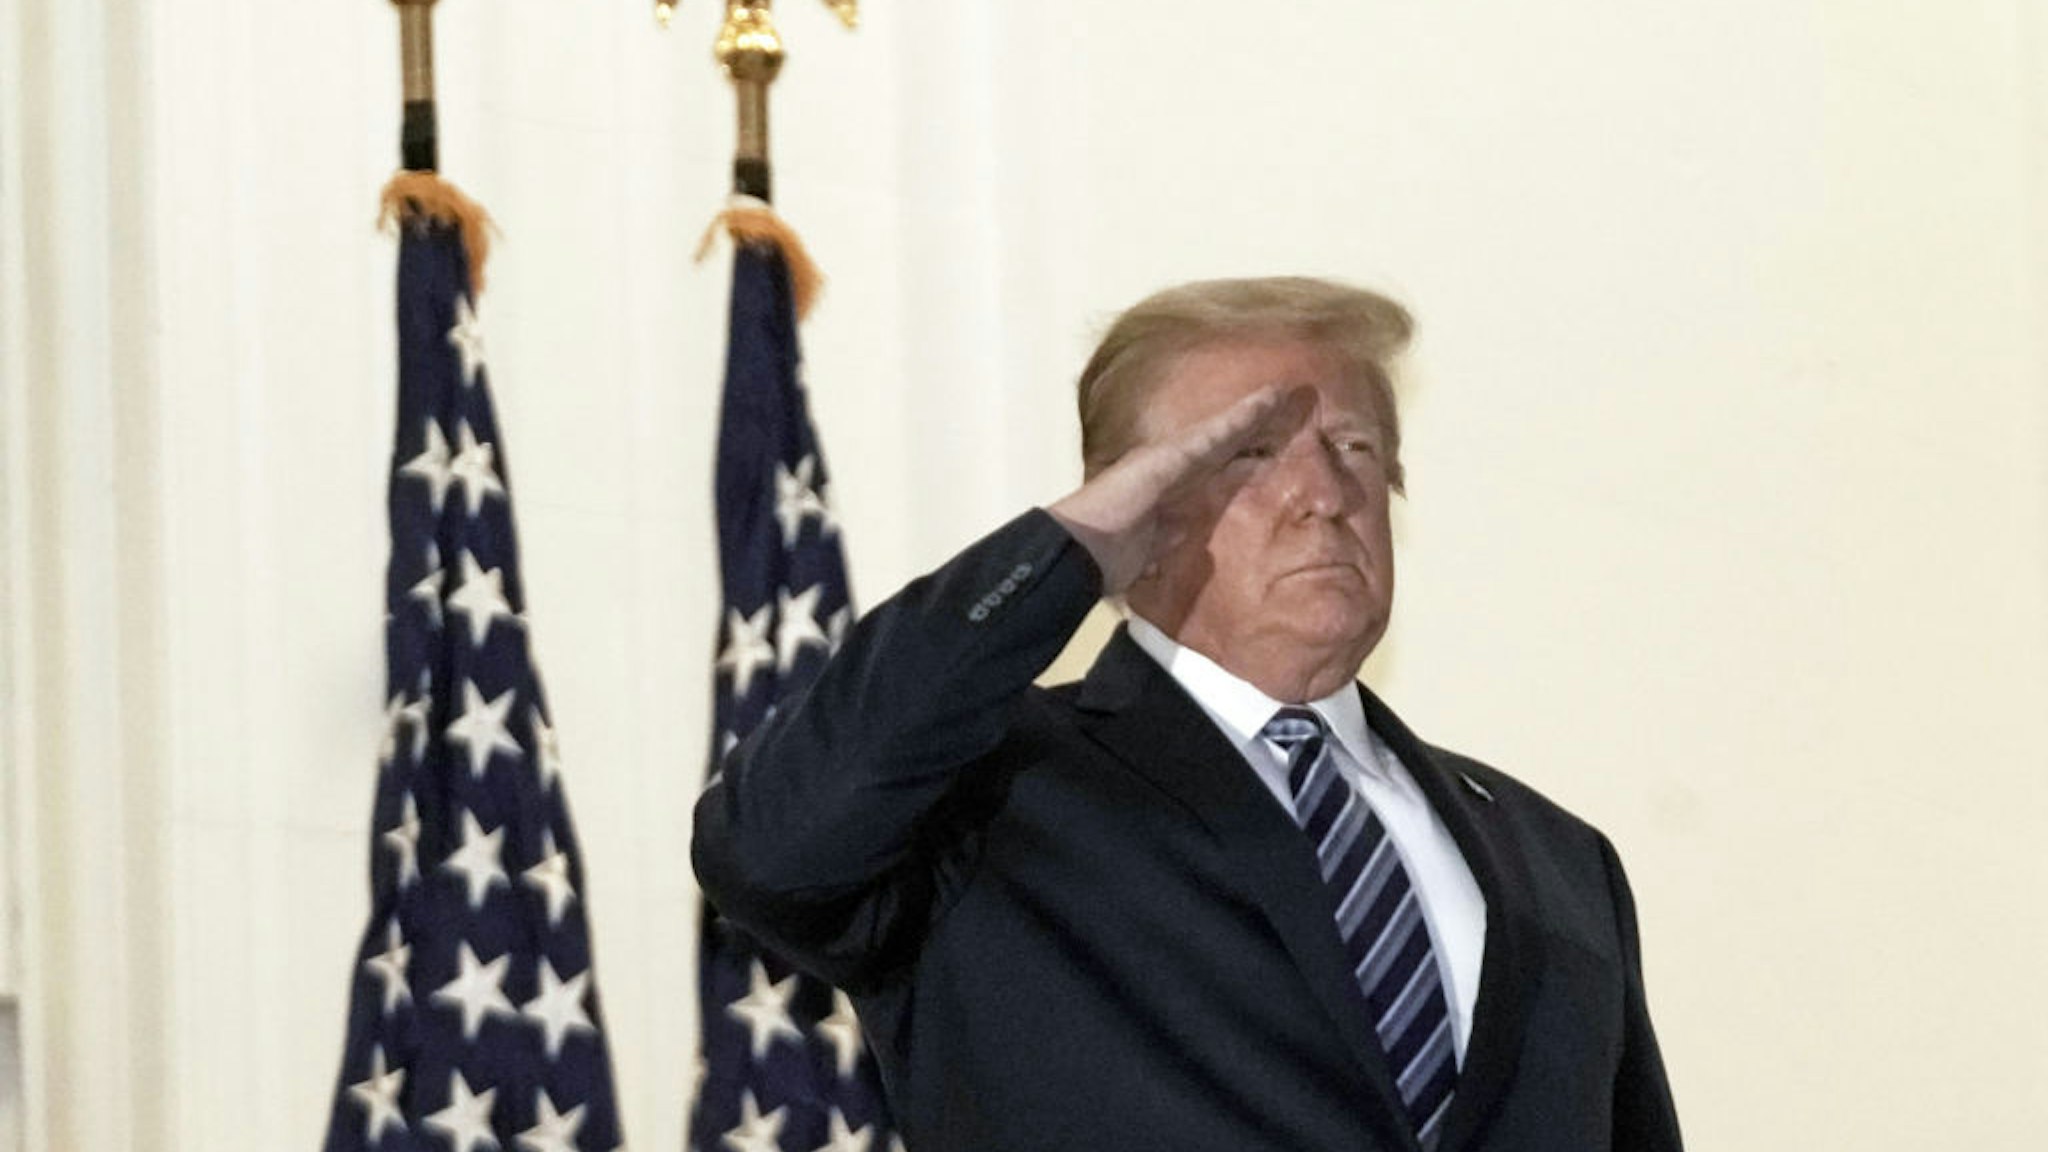 Trump saluting